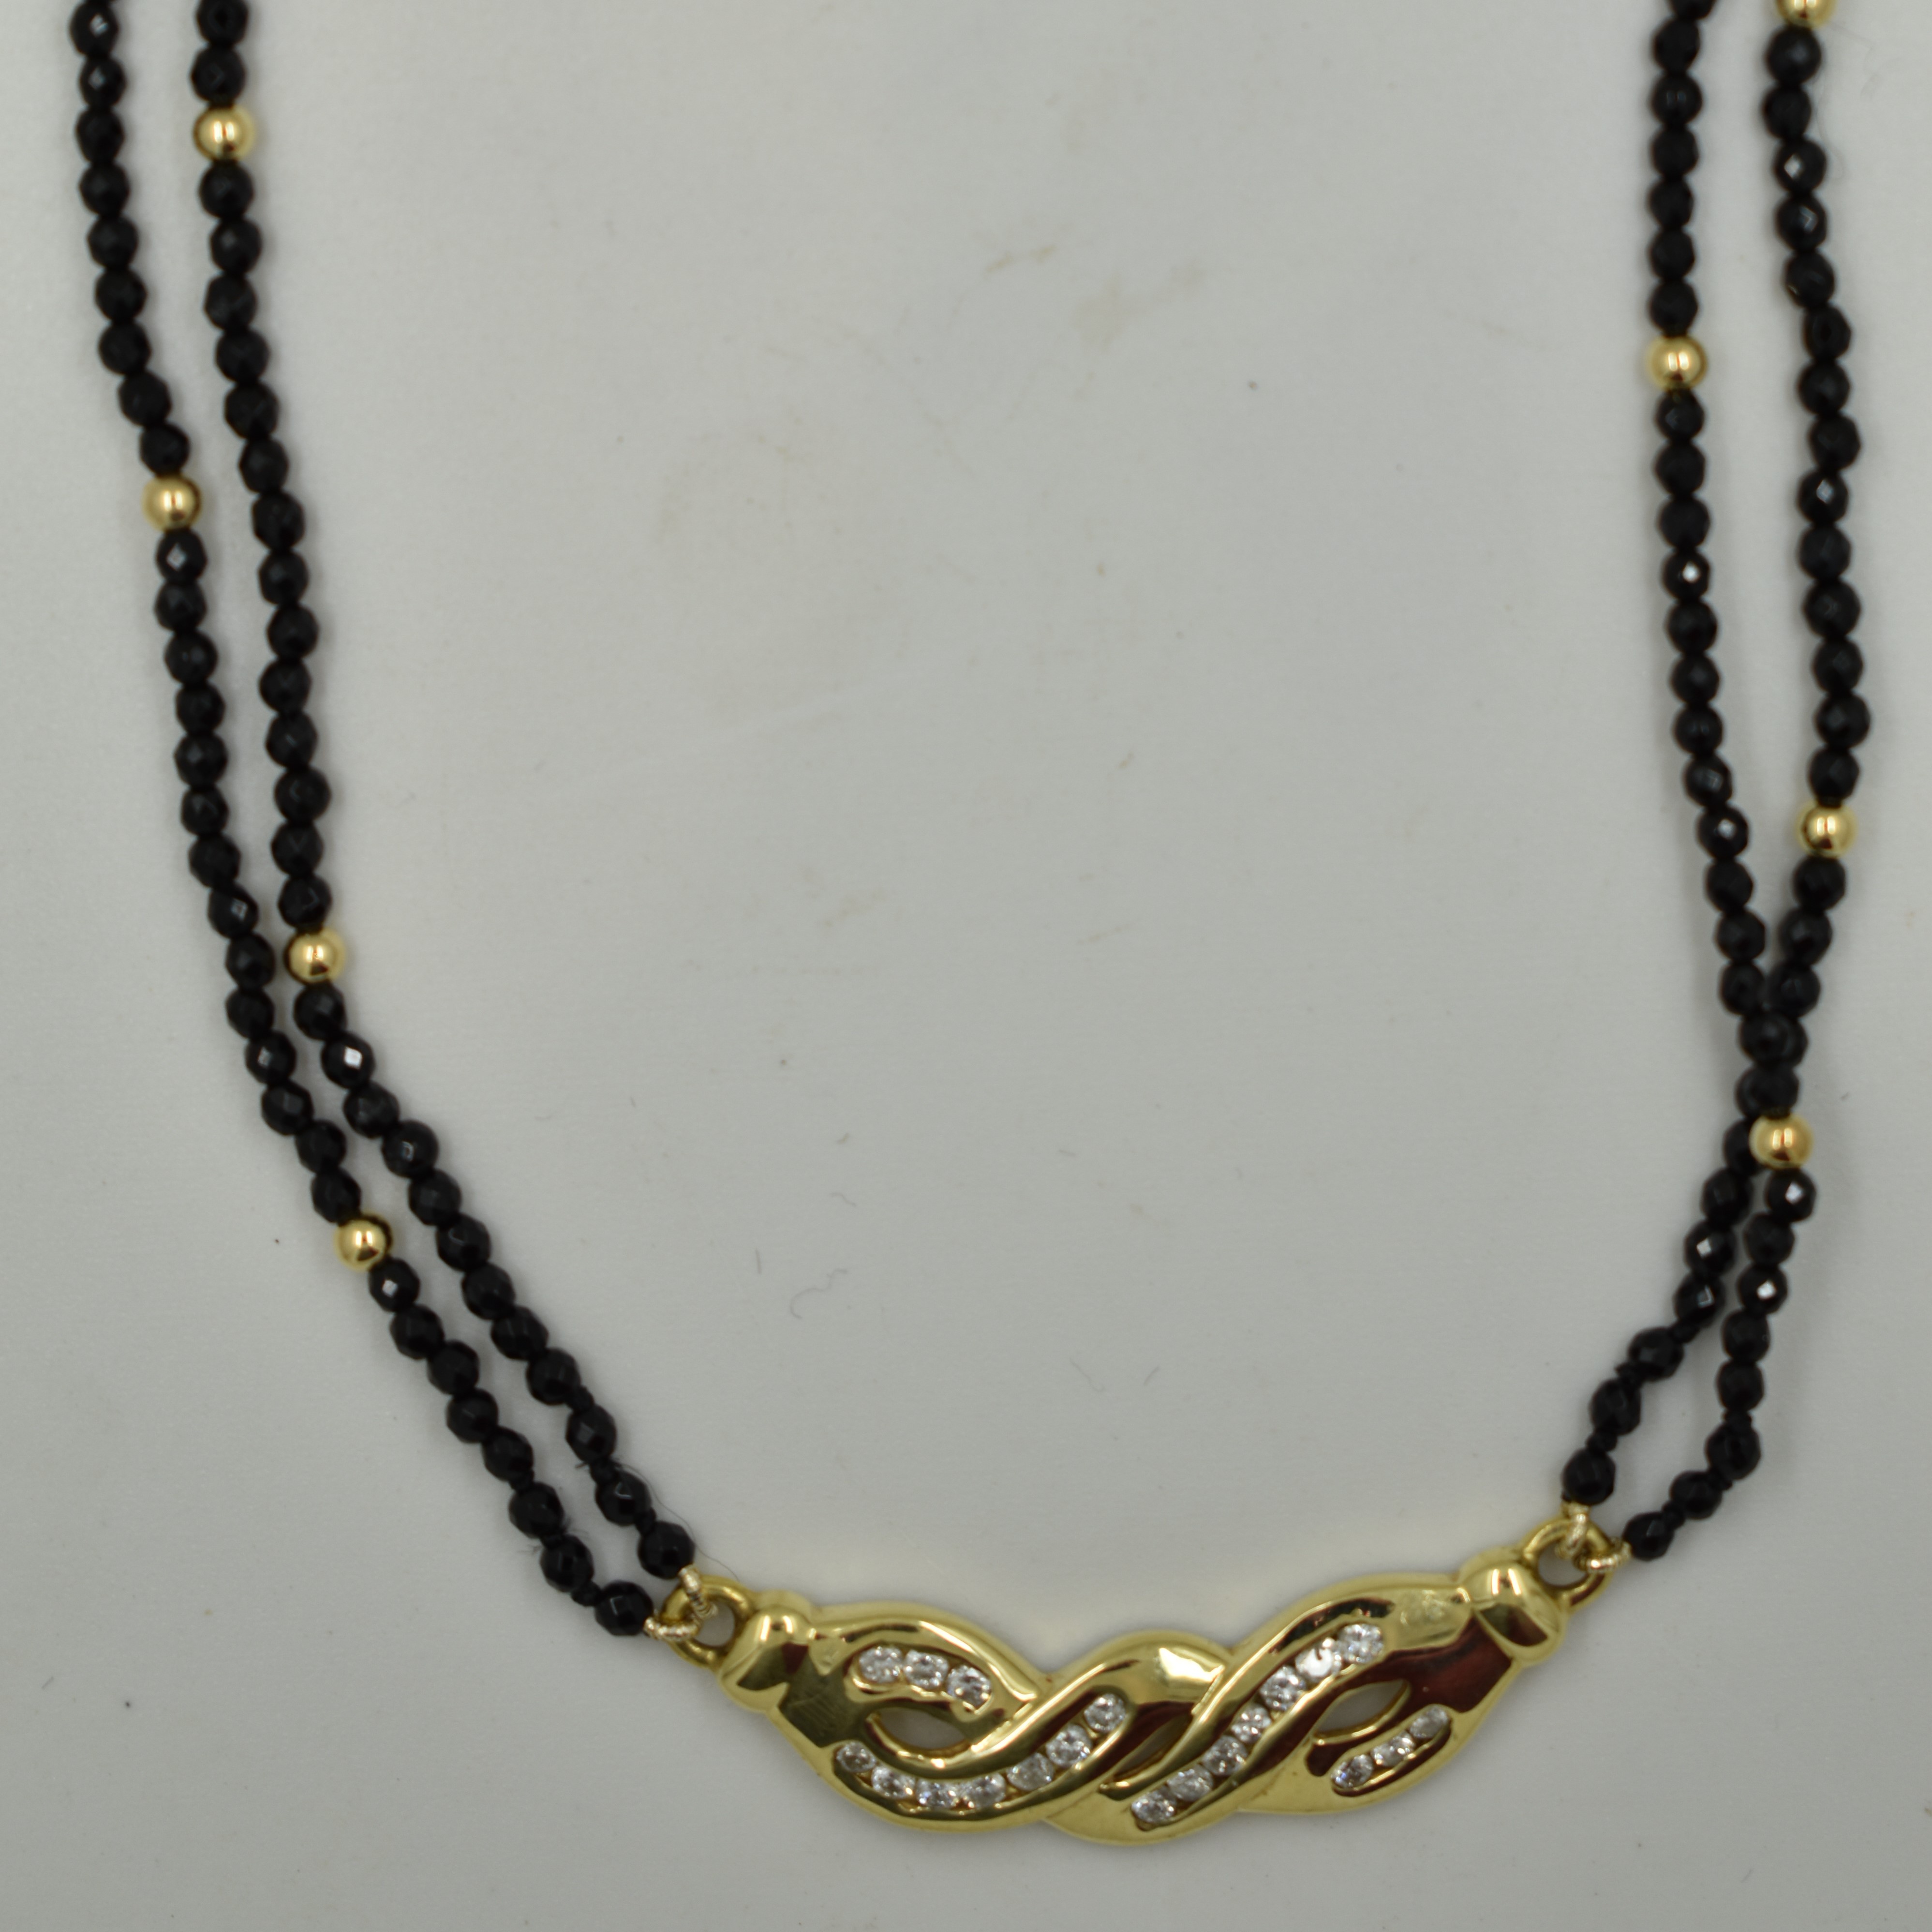 14K Yellow Gold
0.50ct with Onyx beads
Regular Price $4100
SALE $1250
Ref: NN215